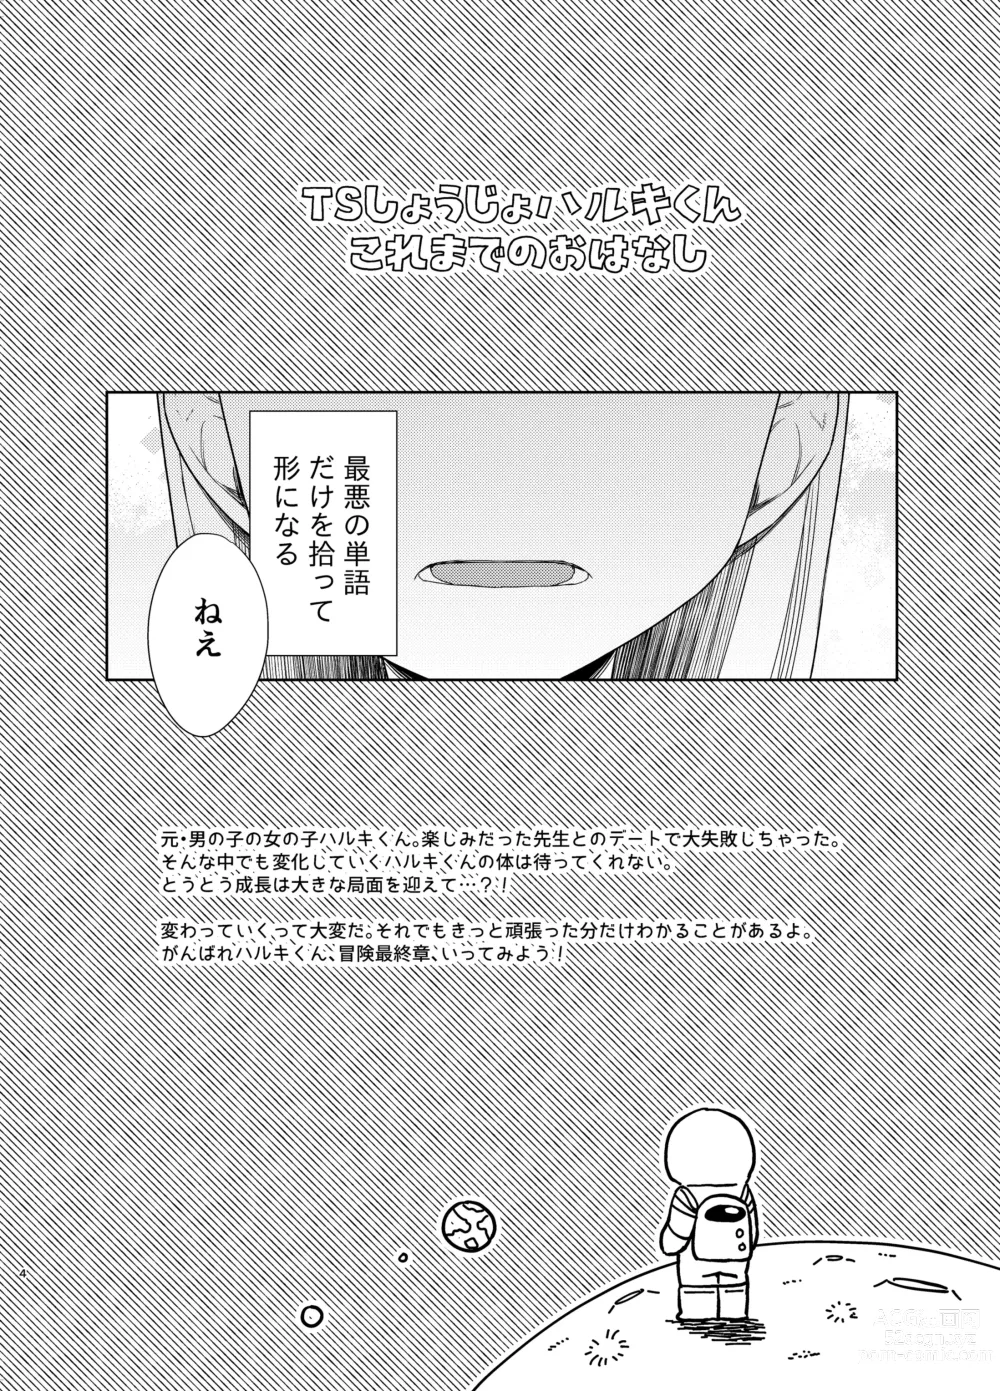 Page 3 of doujinshi TS Shoujo Haruki-kun 5